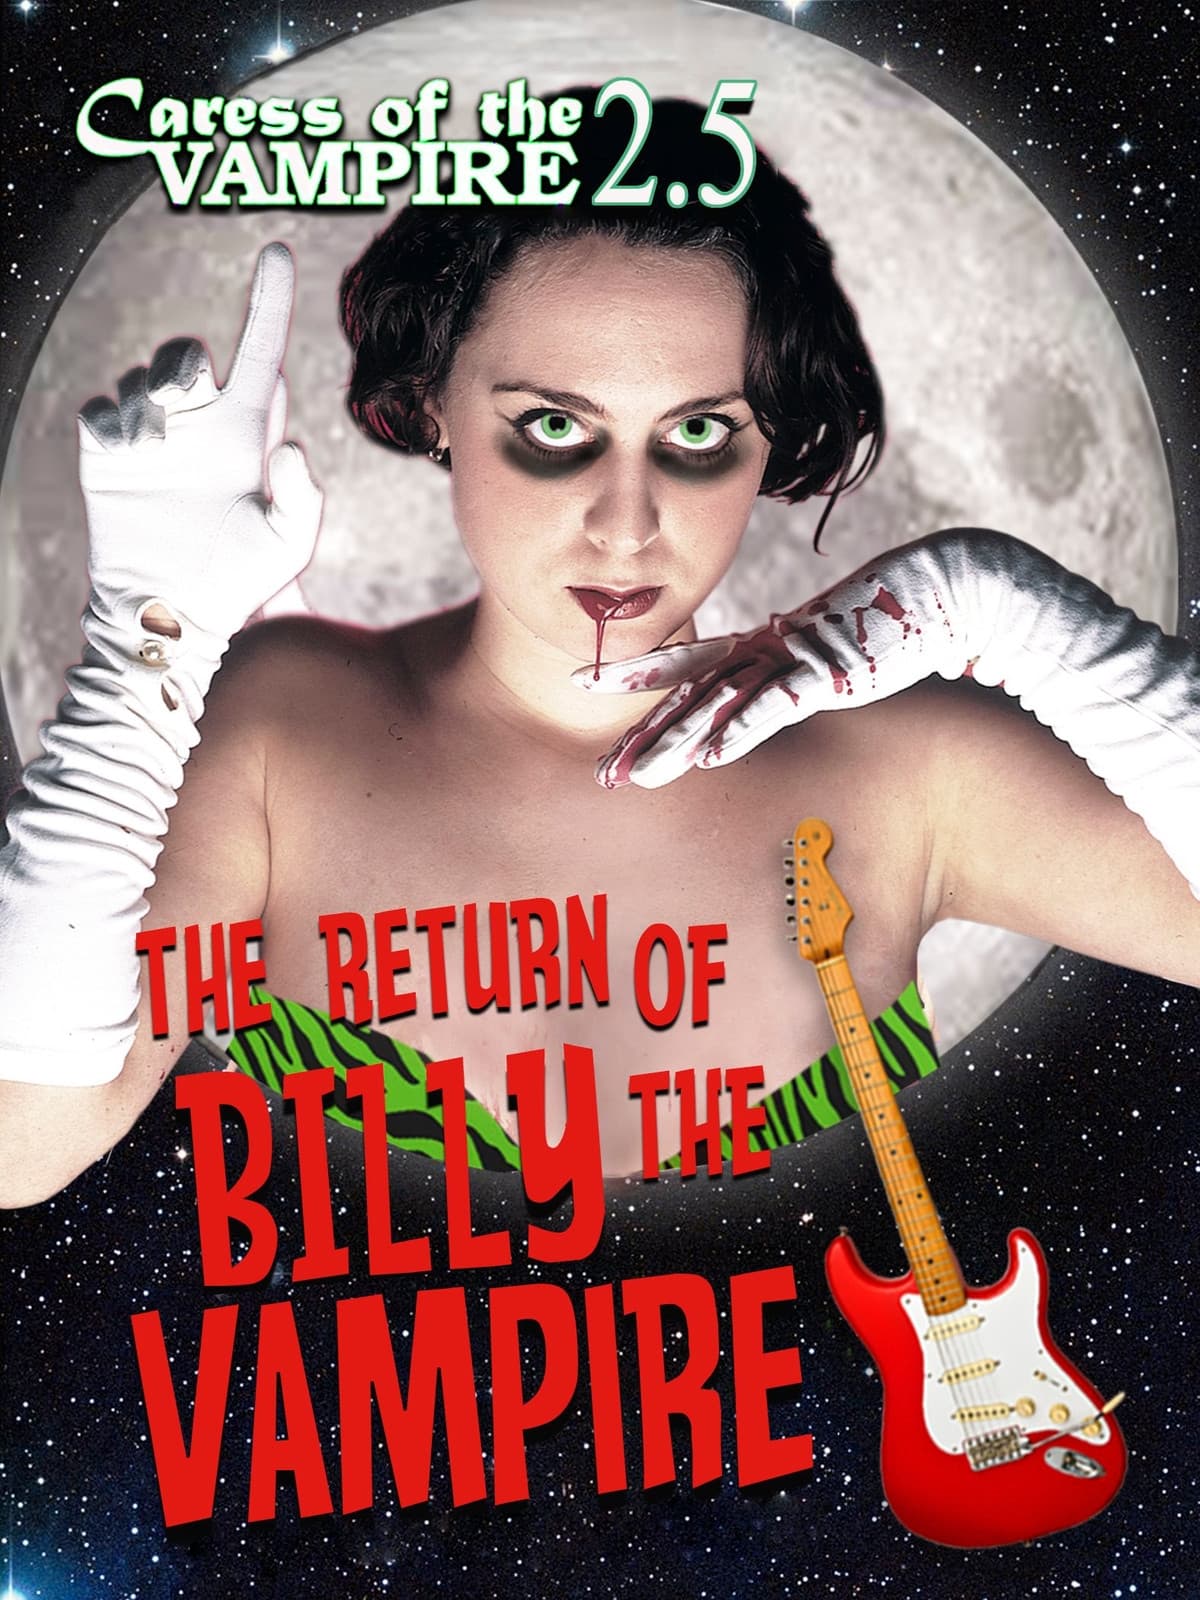 Caress of the Vampire 2.5: The Return of Billy the Vampire